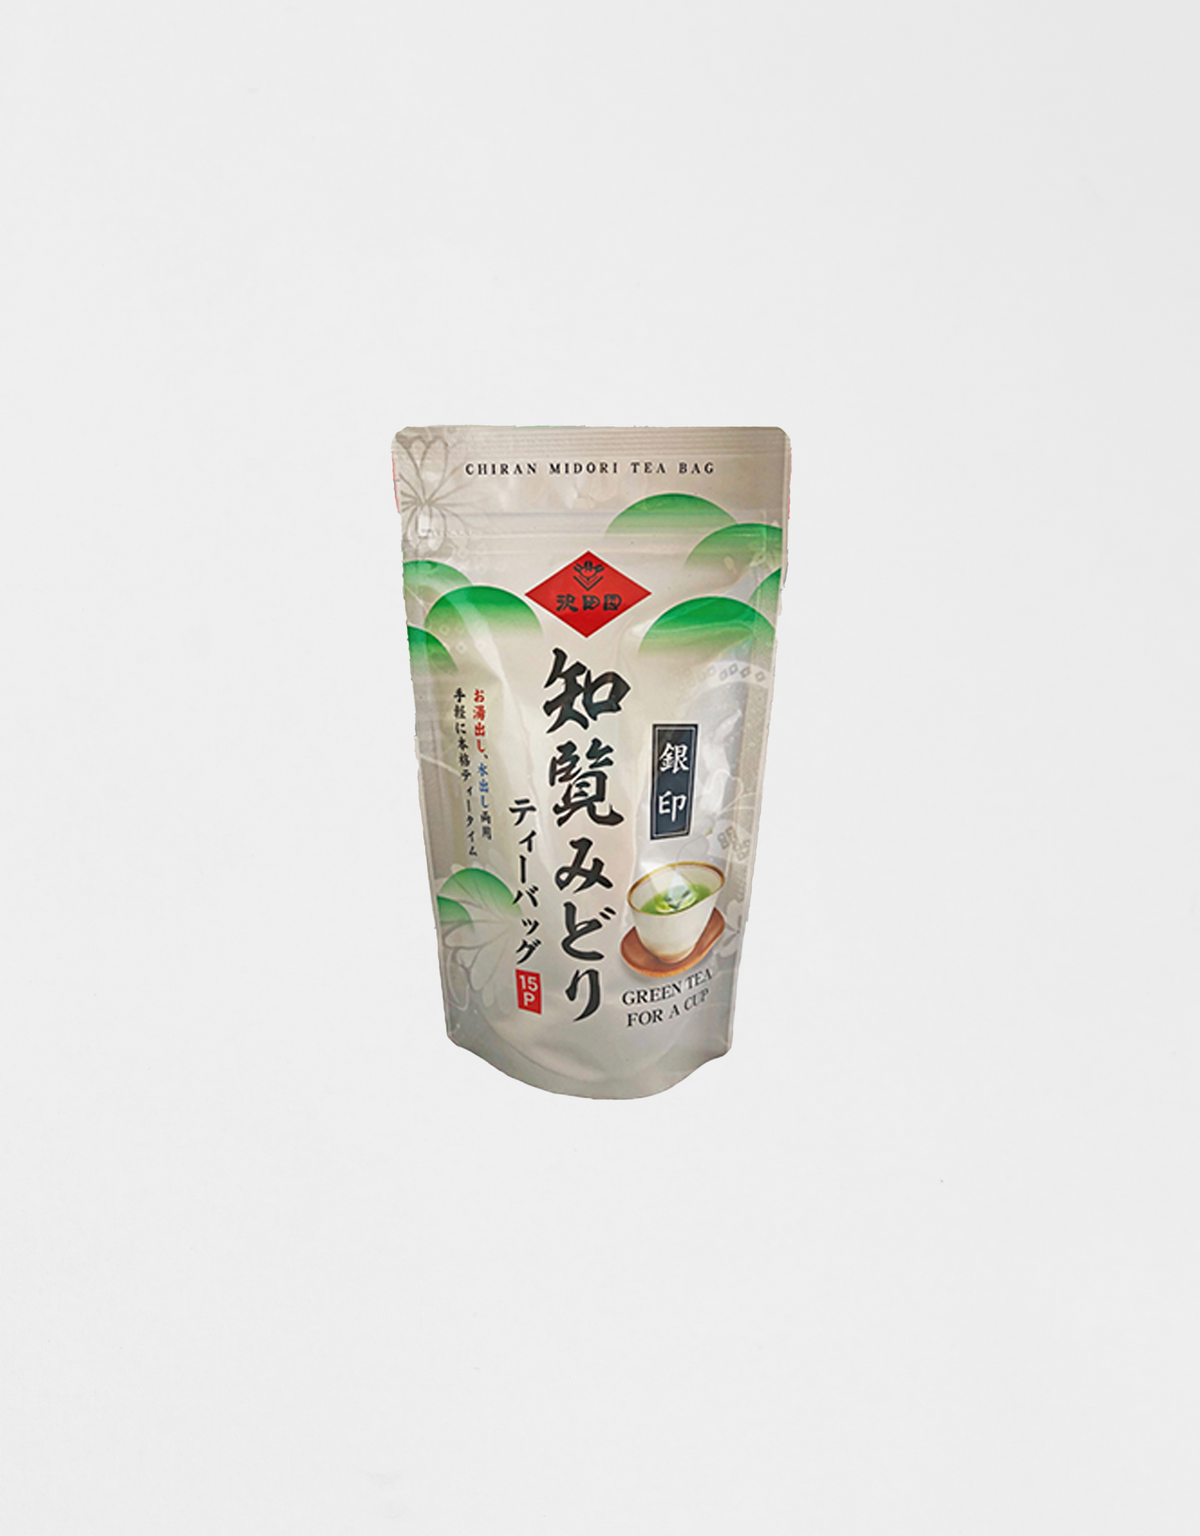 Chiran Midori silver seal tea bag